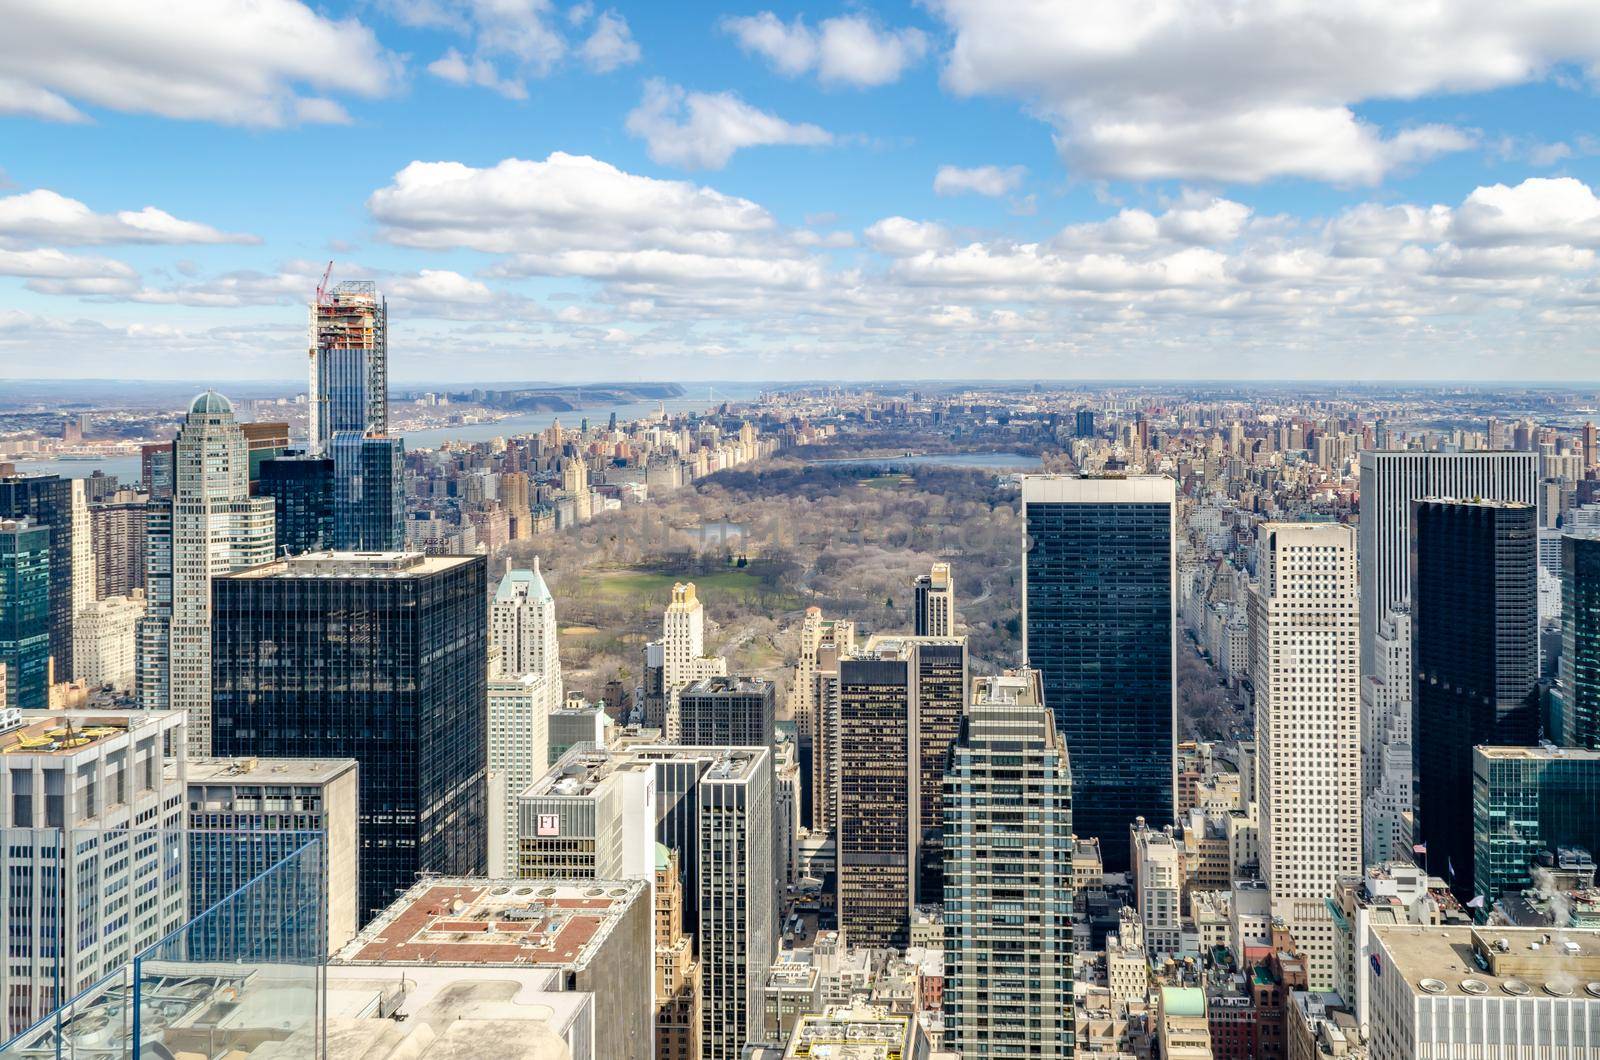 Central Park New York City aerial view from Rockefeller Center by bildgigant